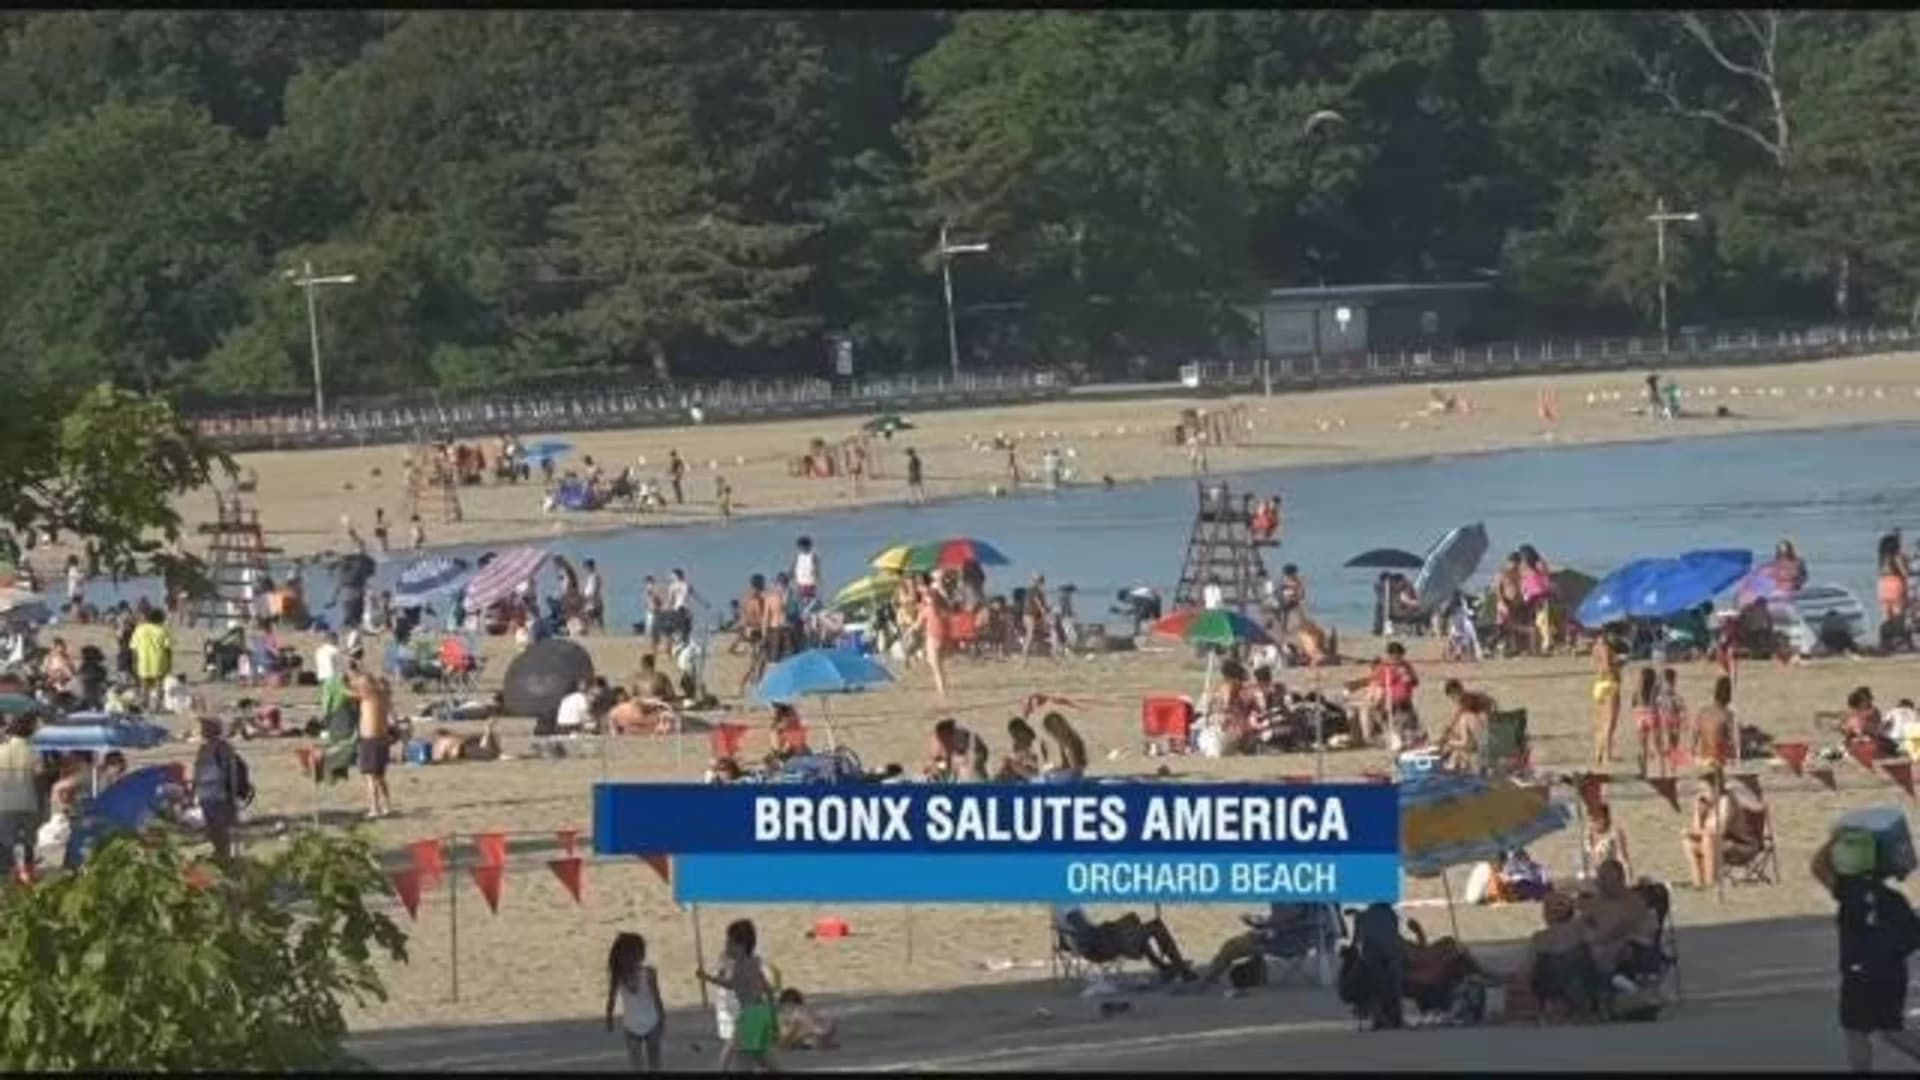 Bronx Salutes America returns to Orchard Beach